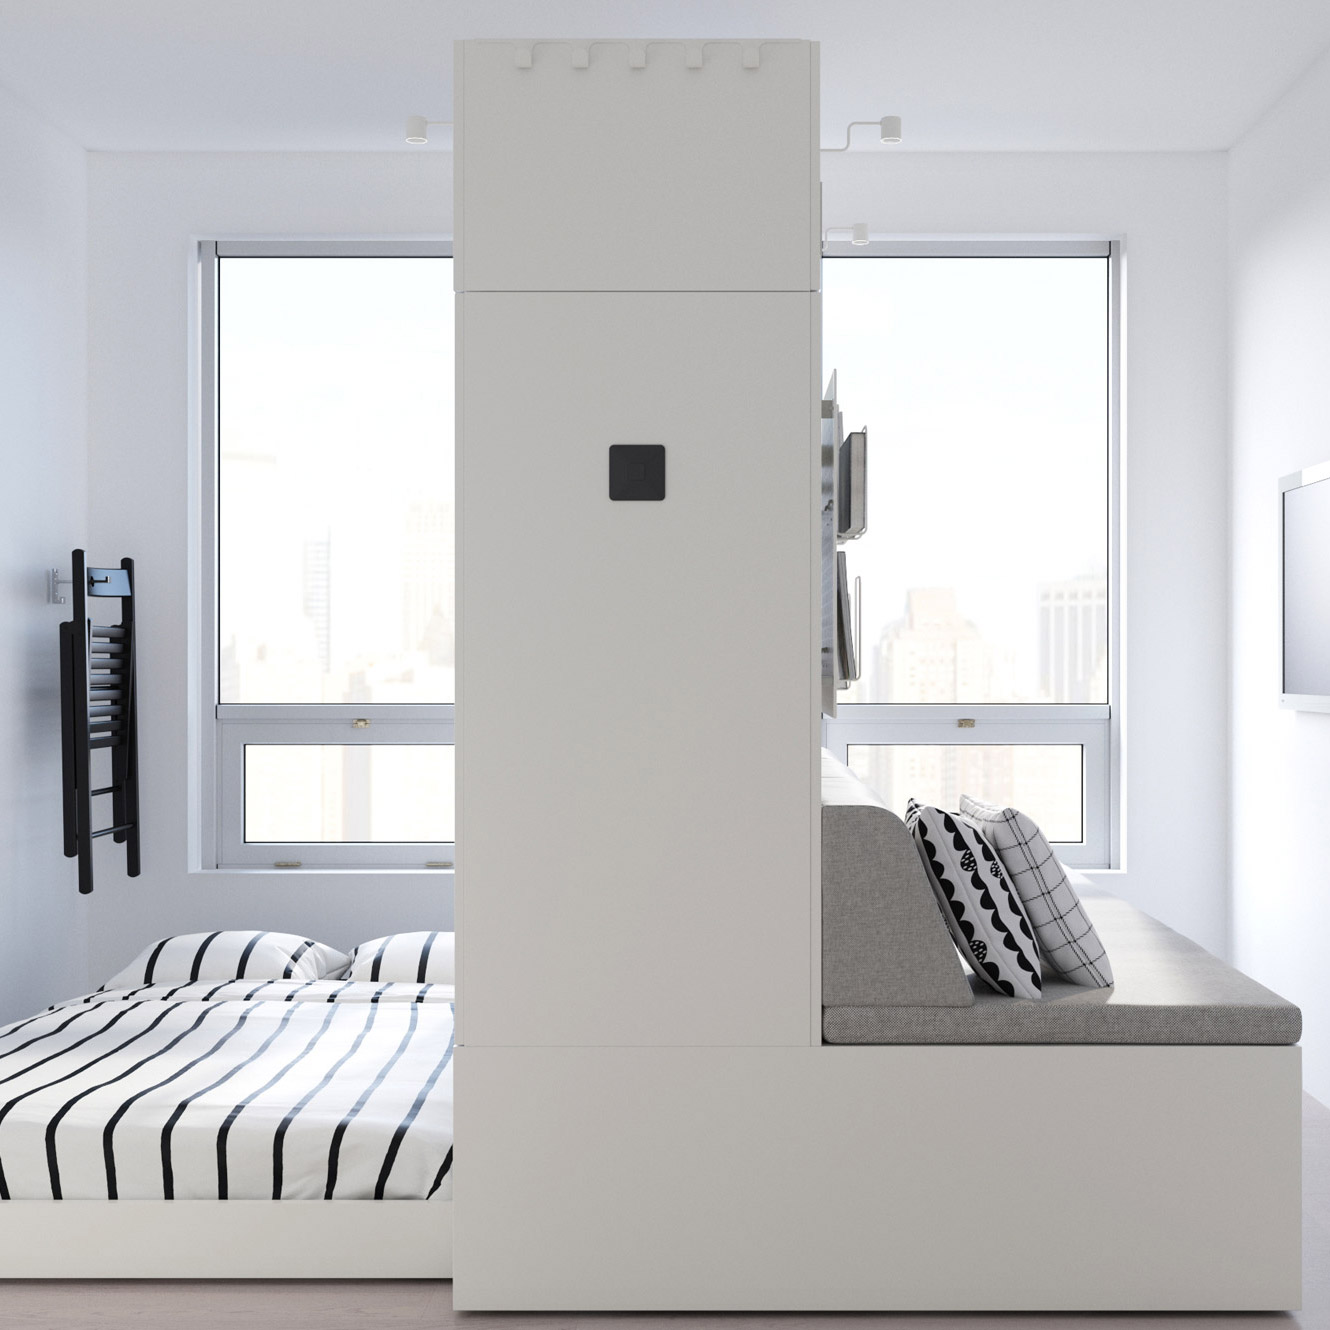 Ikea And Ori Collaborate On Robotic Rognan Furniture For